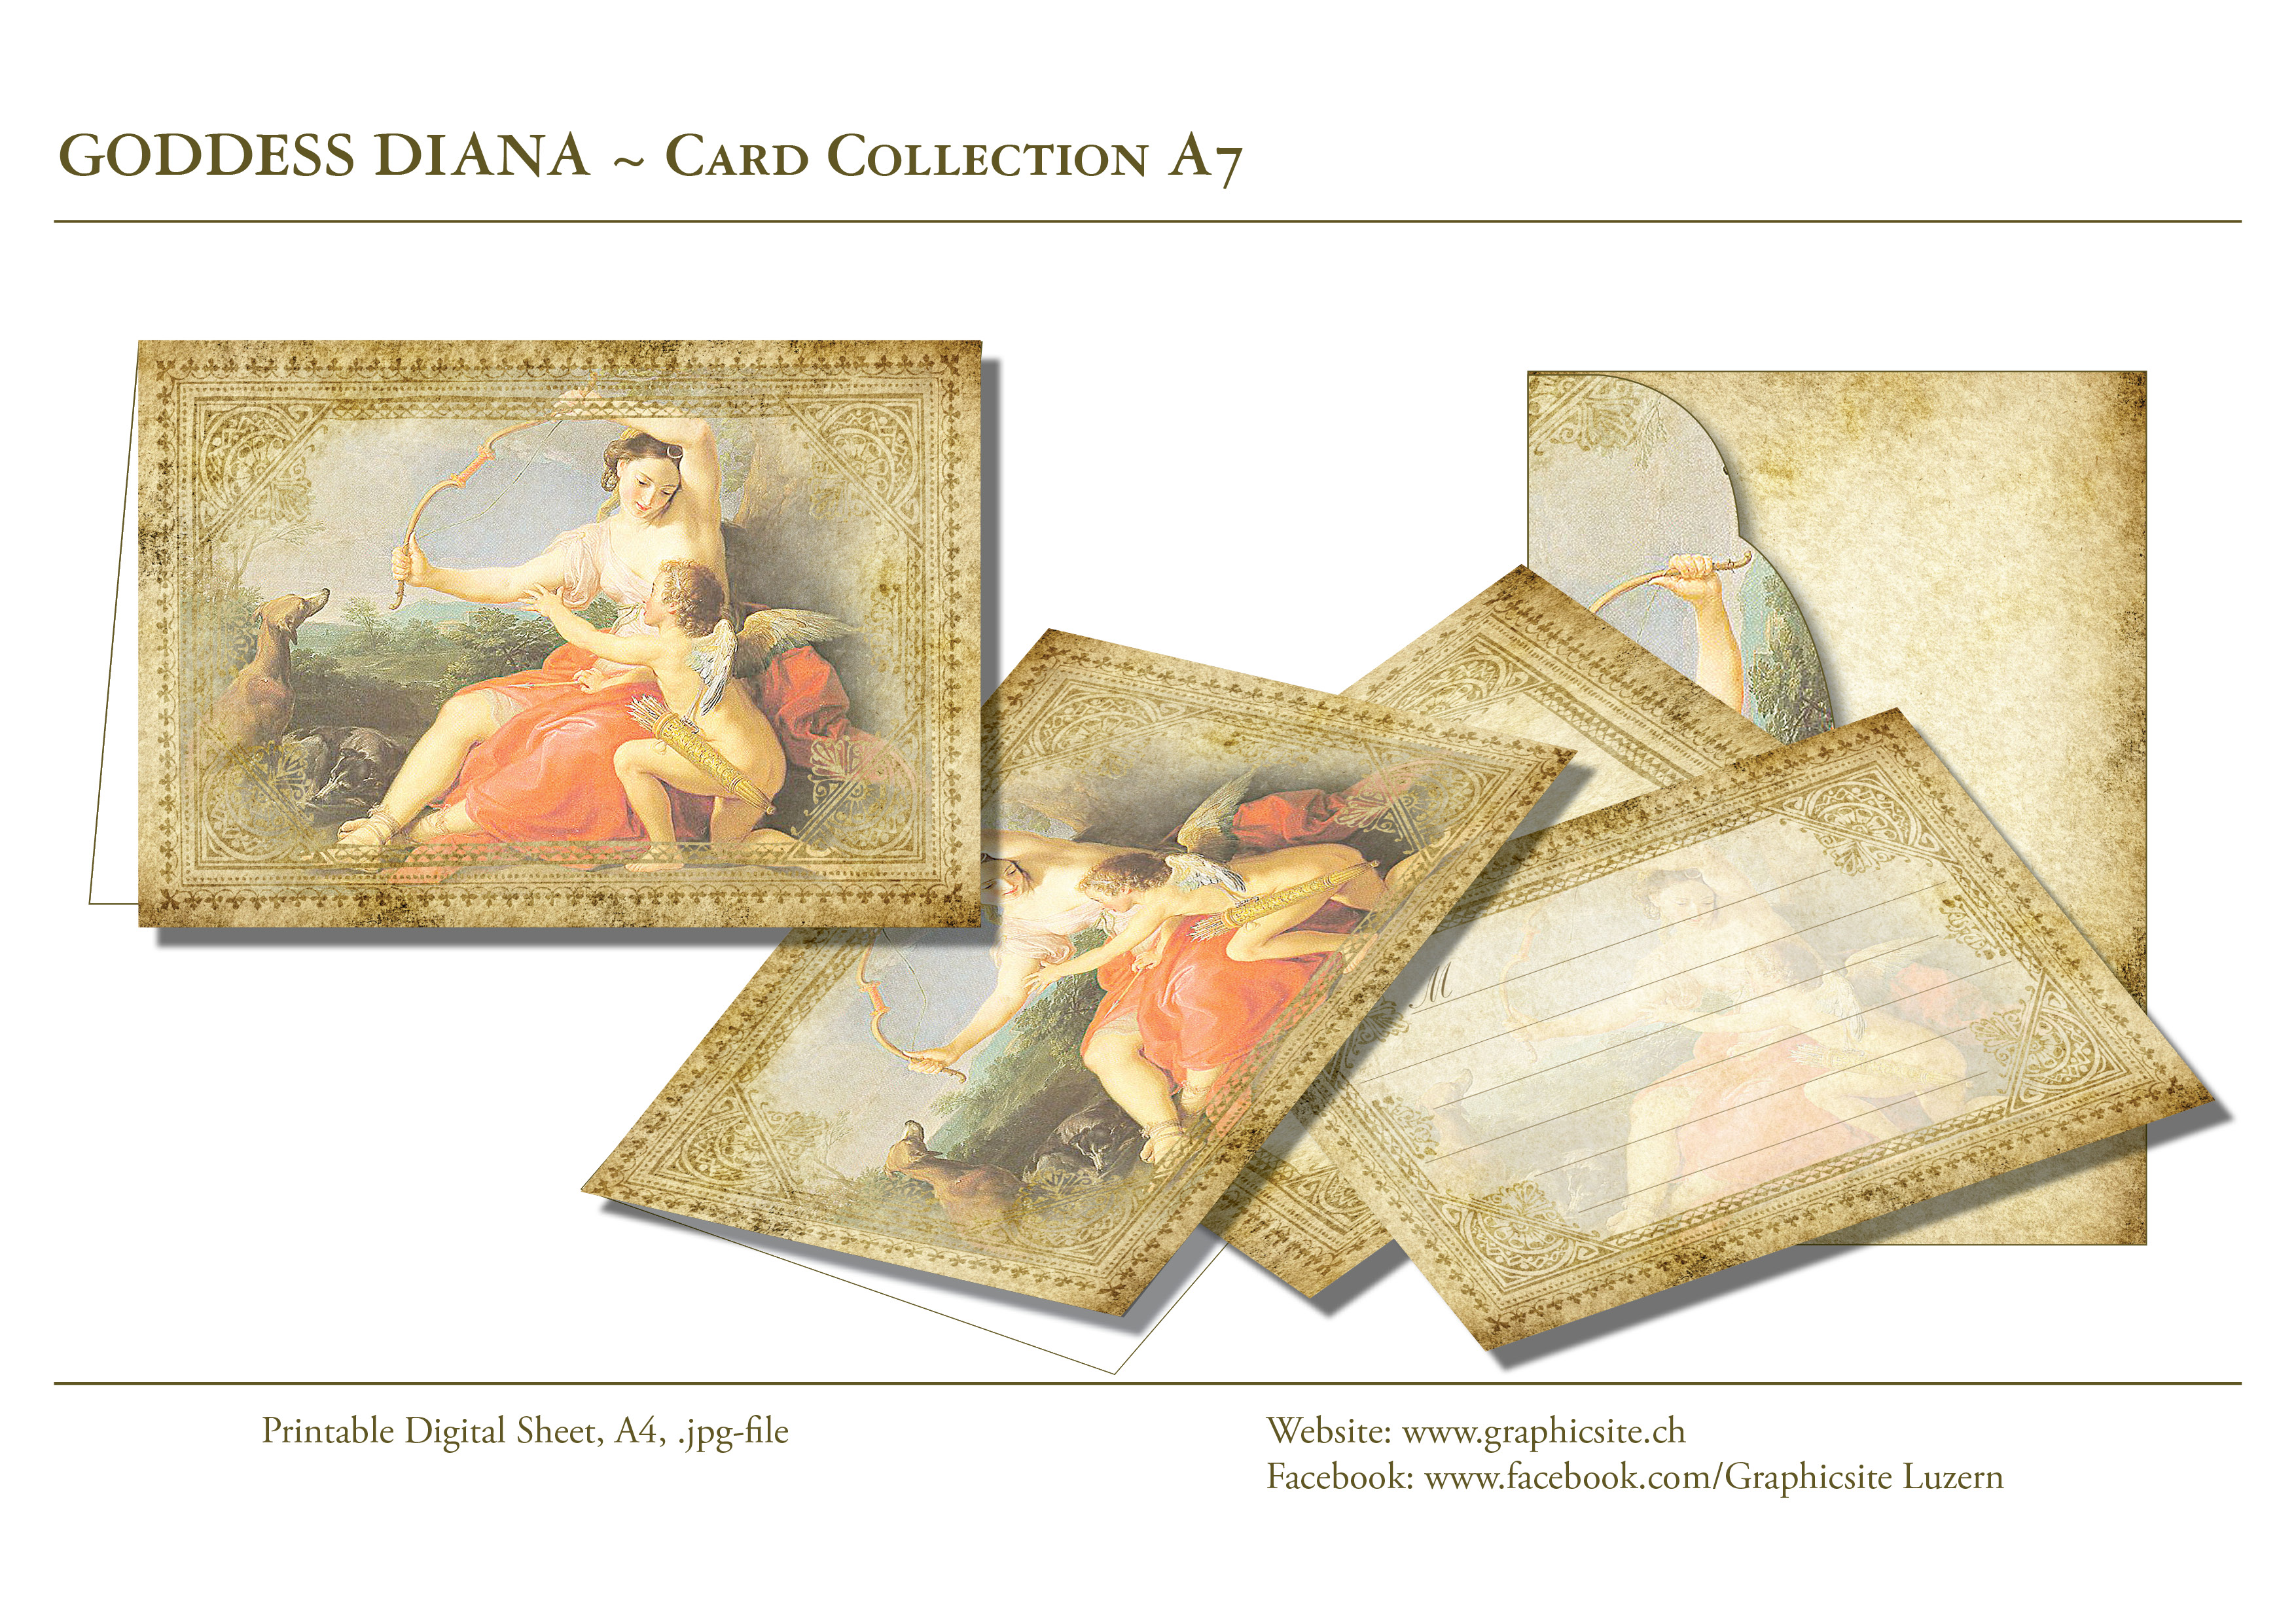 Printable Digital Sheets - Card Collection A7 - Goddess Diana